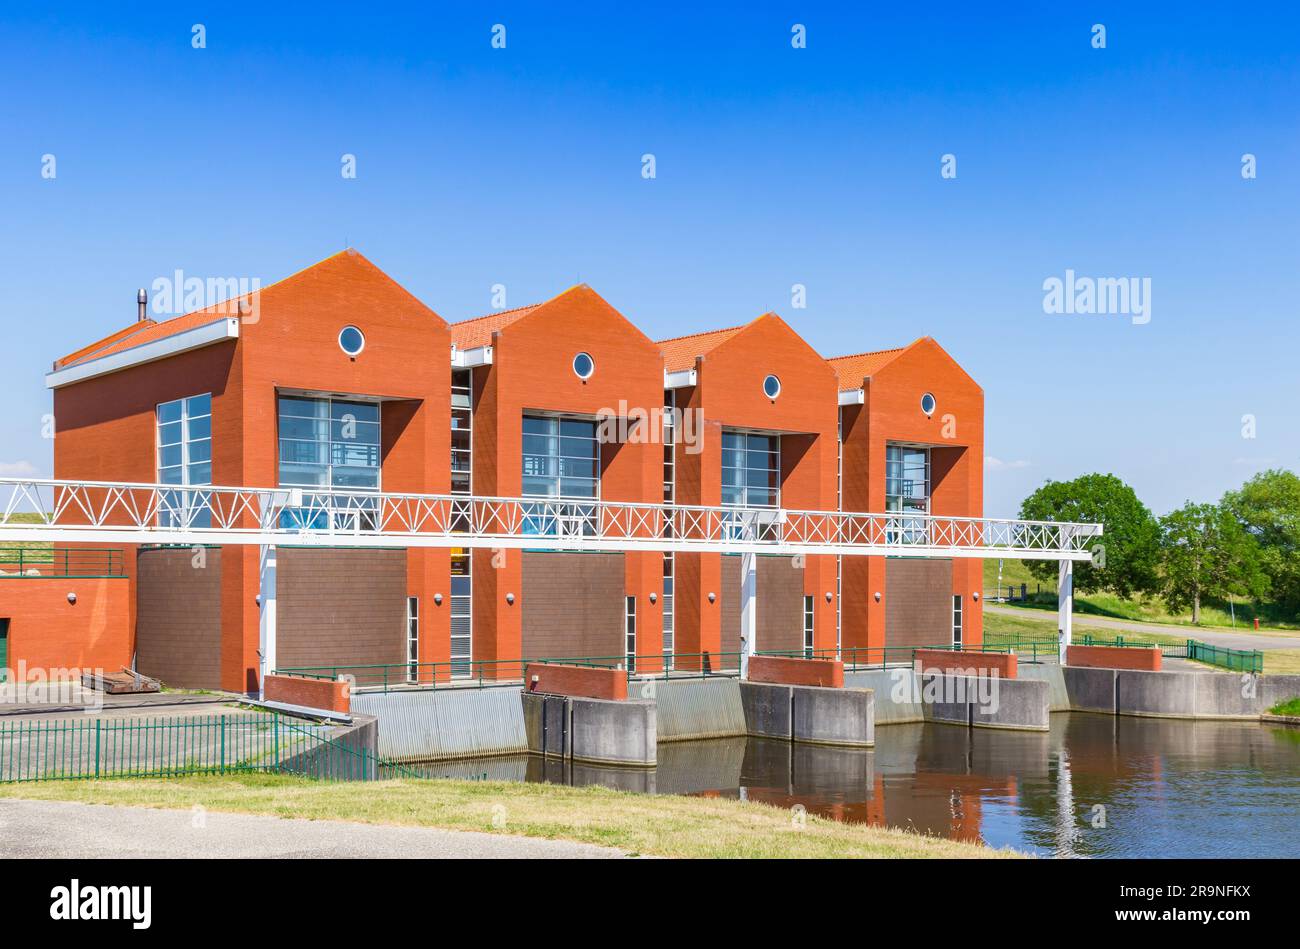 New water pumping station in Termunterzijl, Netherlands Stock Photo